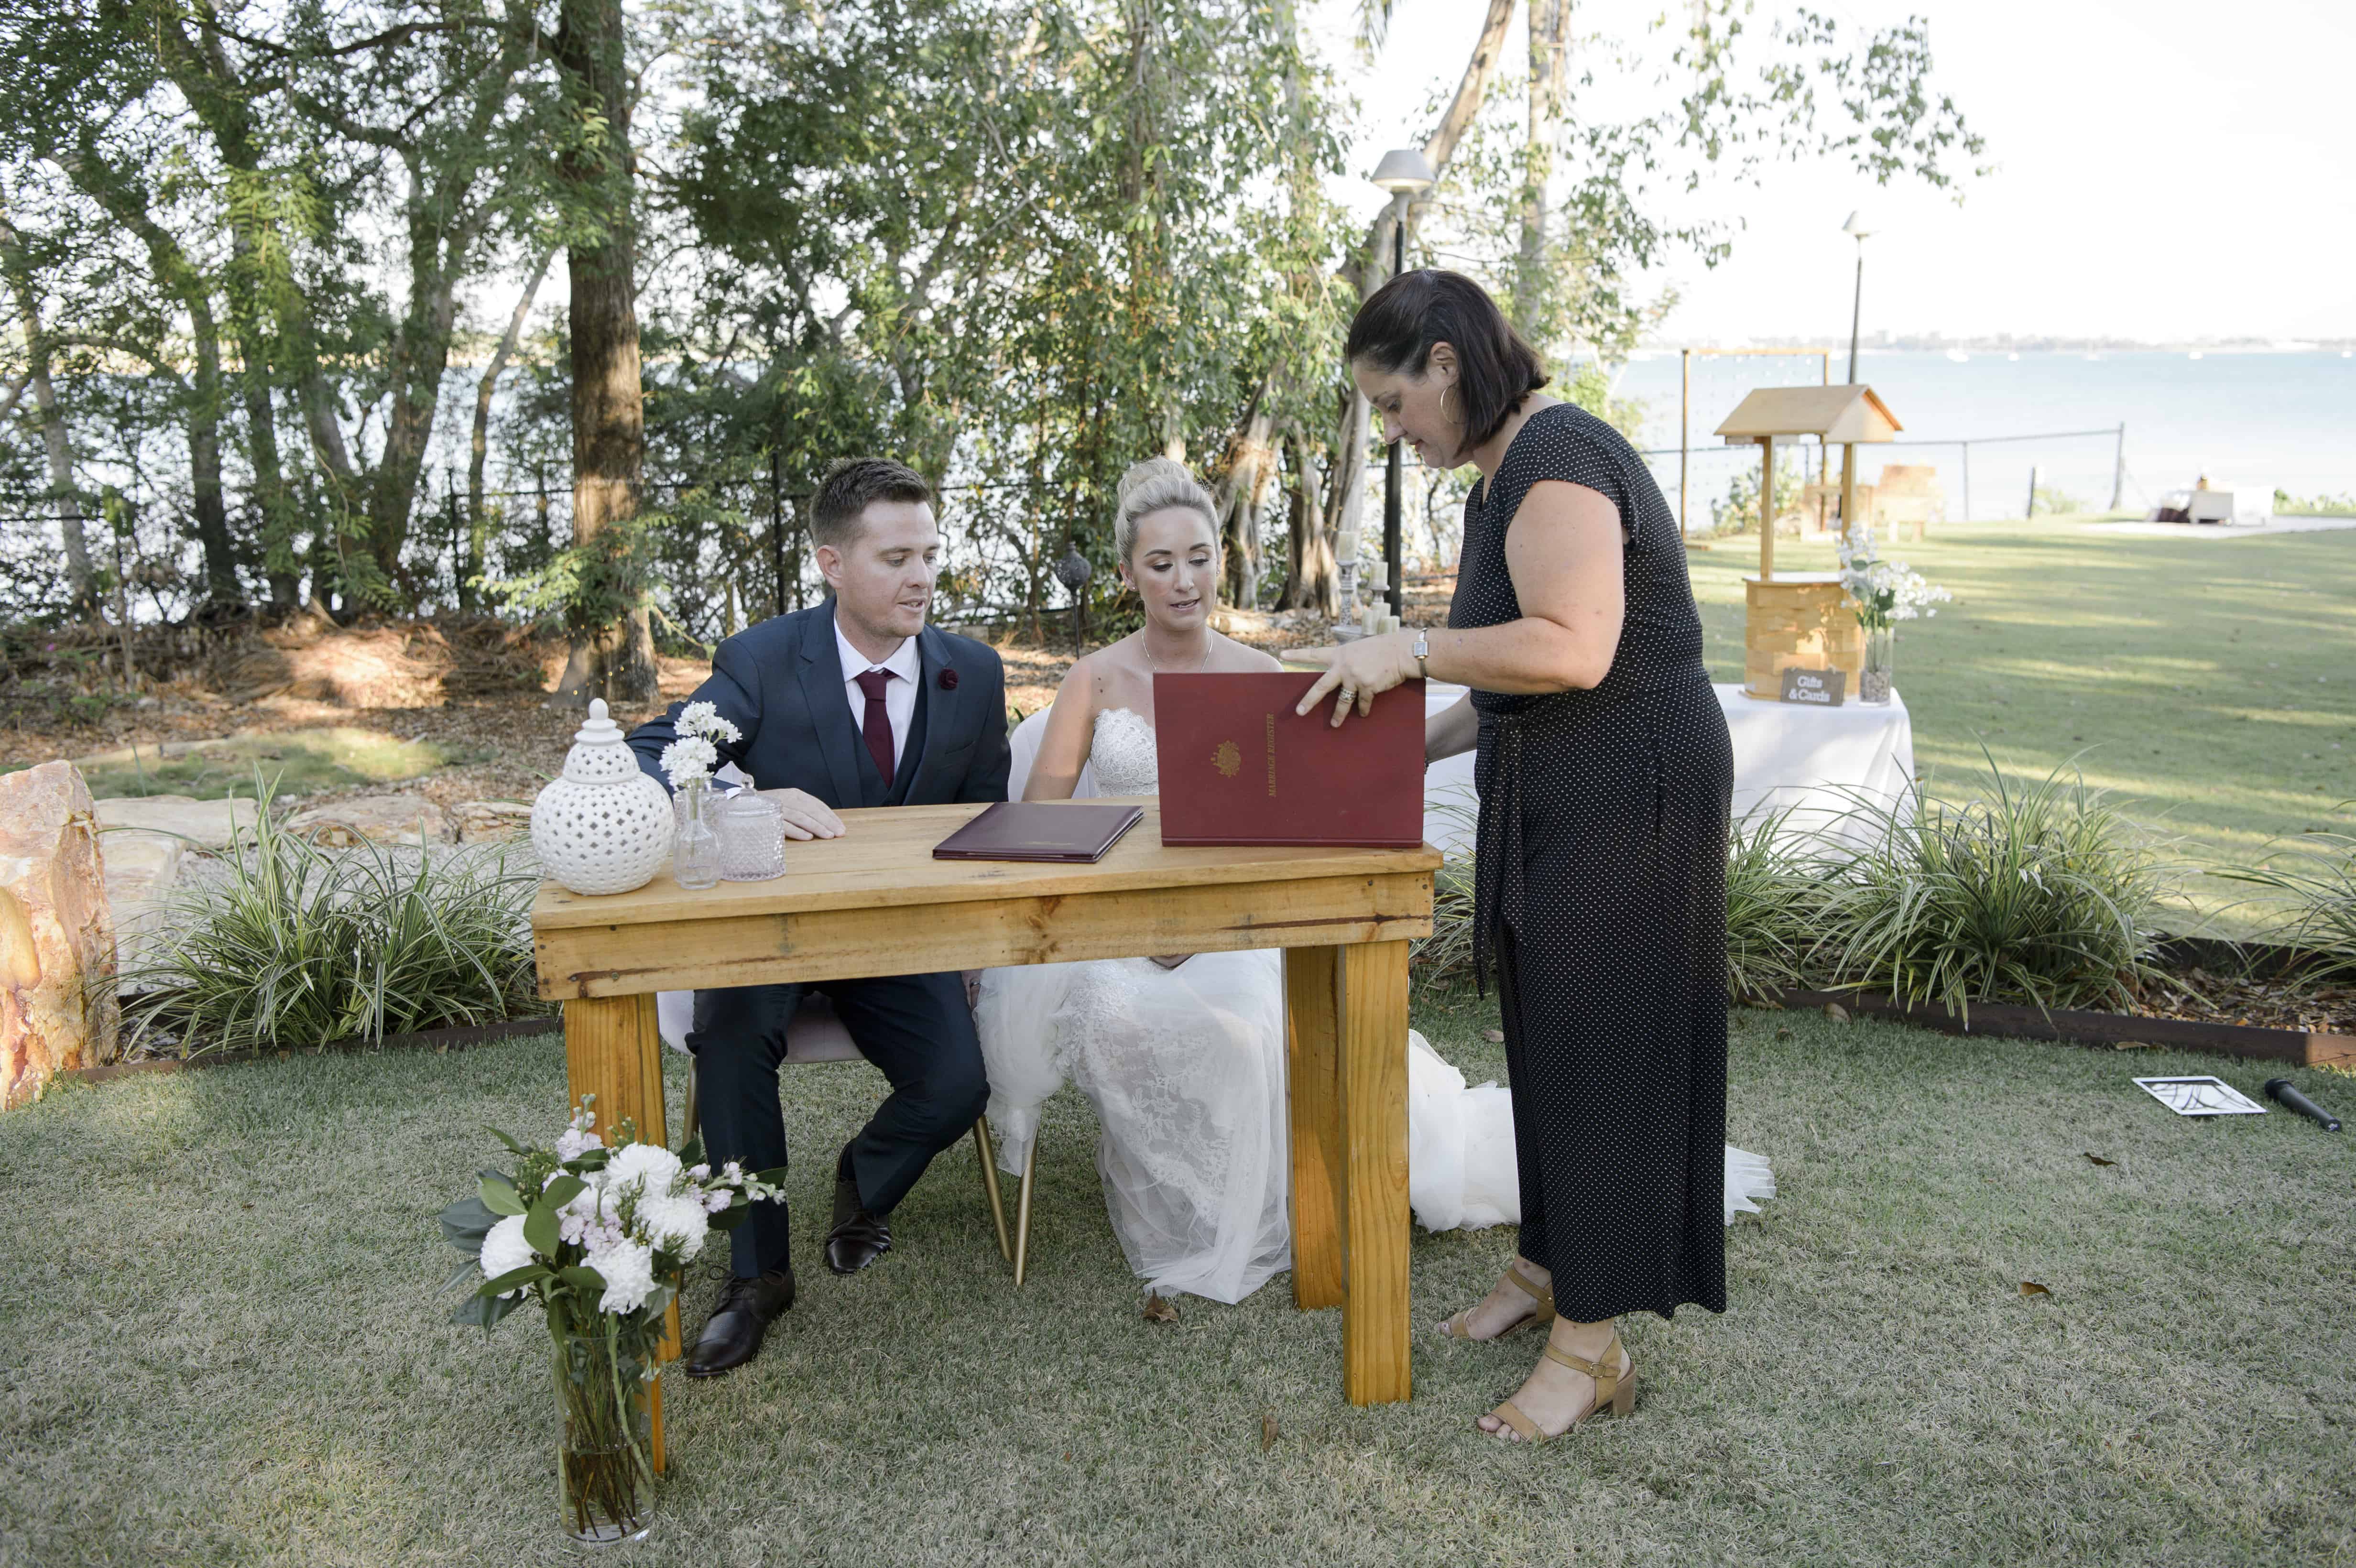 Wedding signing